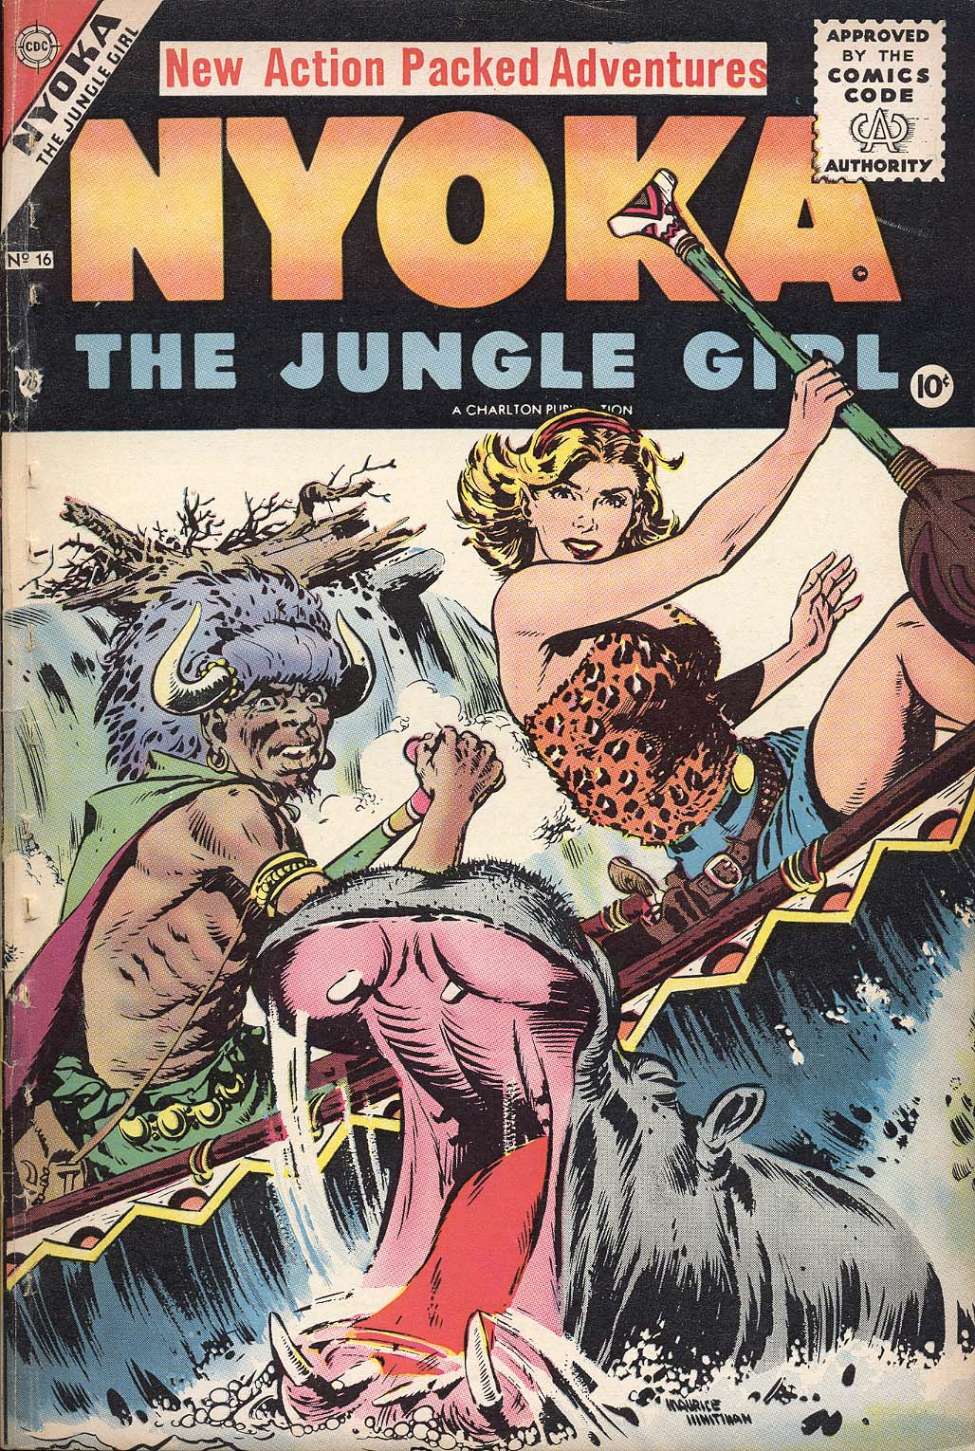 Comic Book Cover For Nyoka the Jungle Girl 16